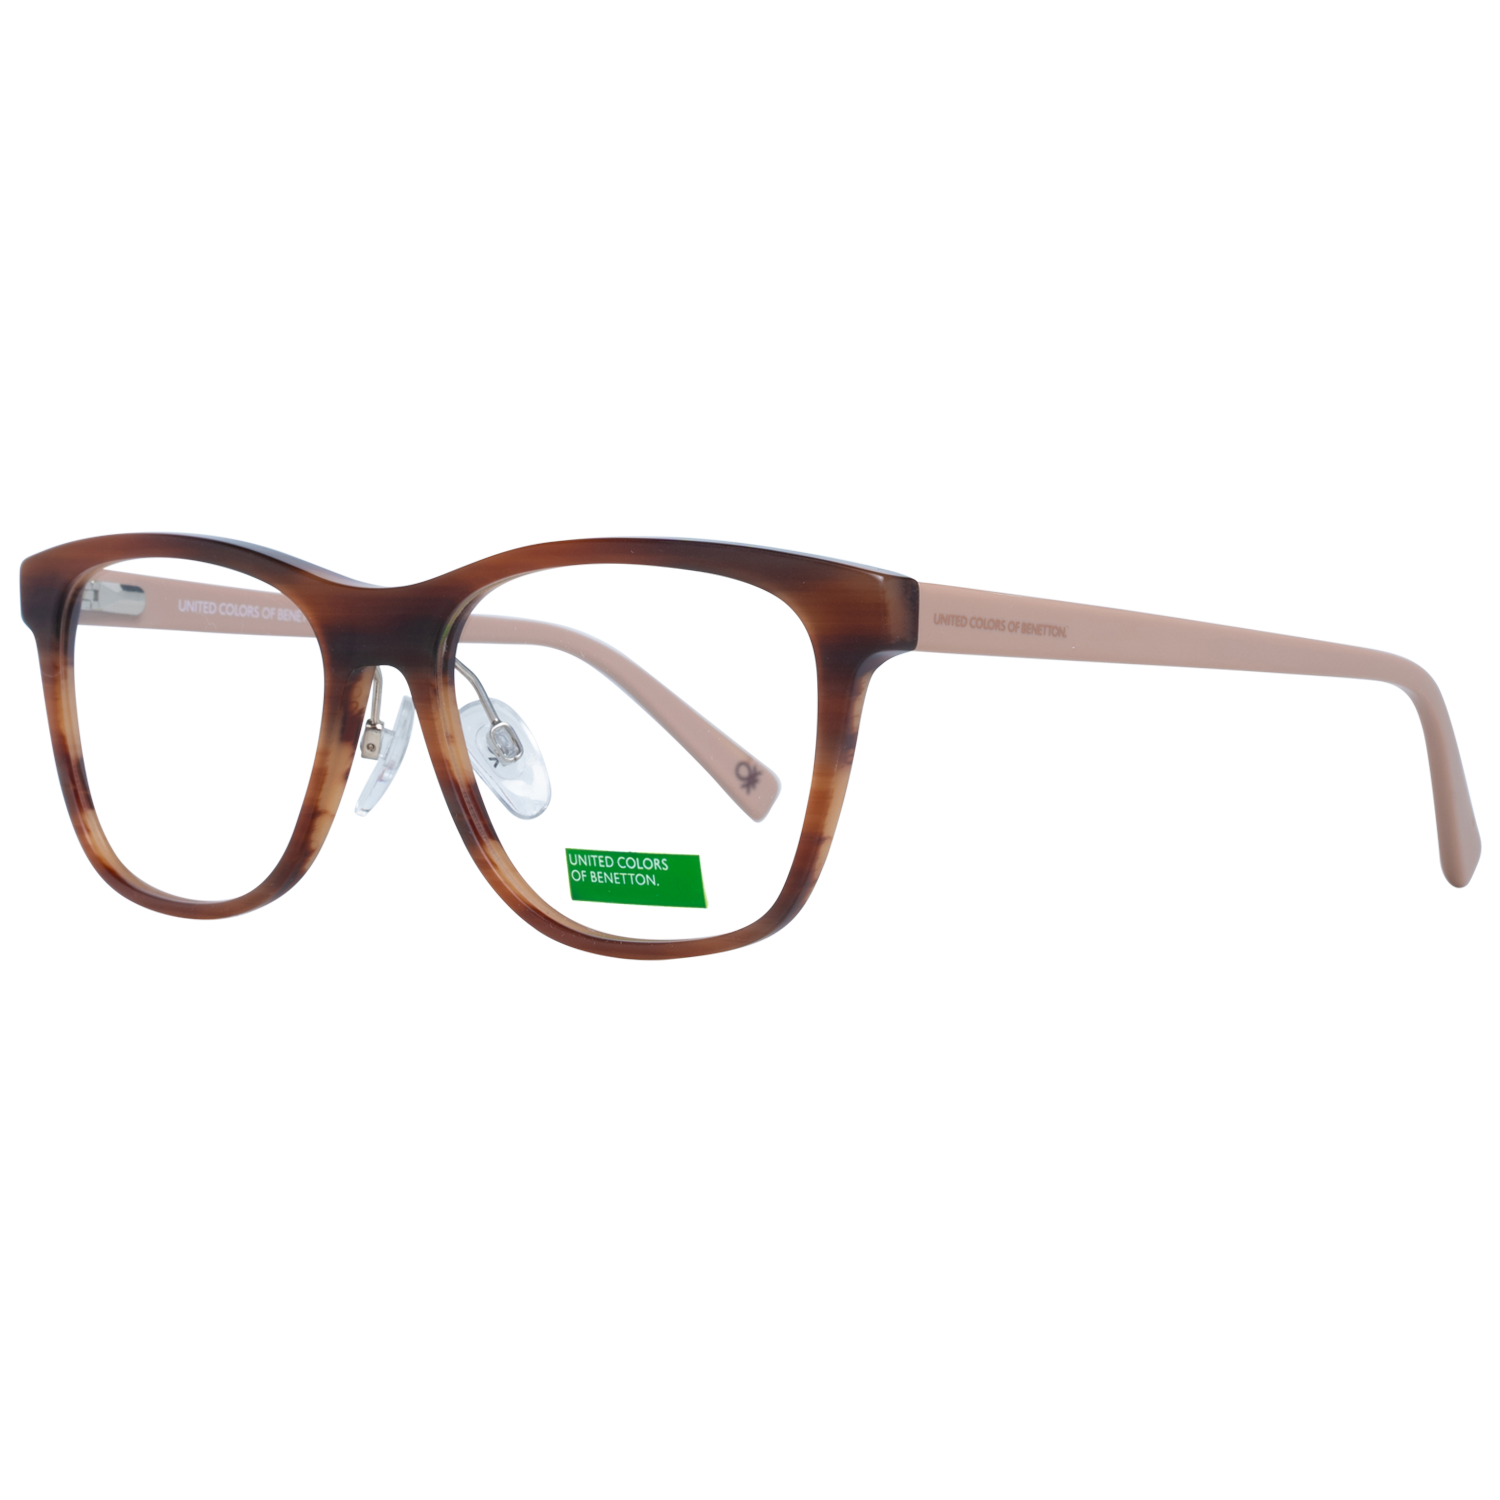 Benetton Frames Benetton Optical Frame BEO1003 151 54 Eyeglasses Eyewear UK USA Australia 